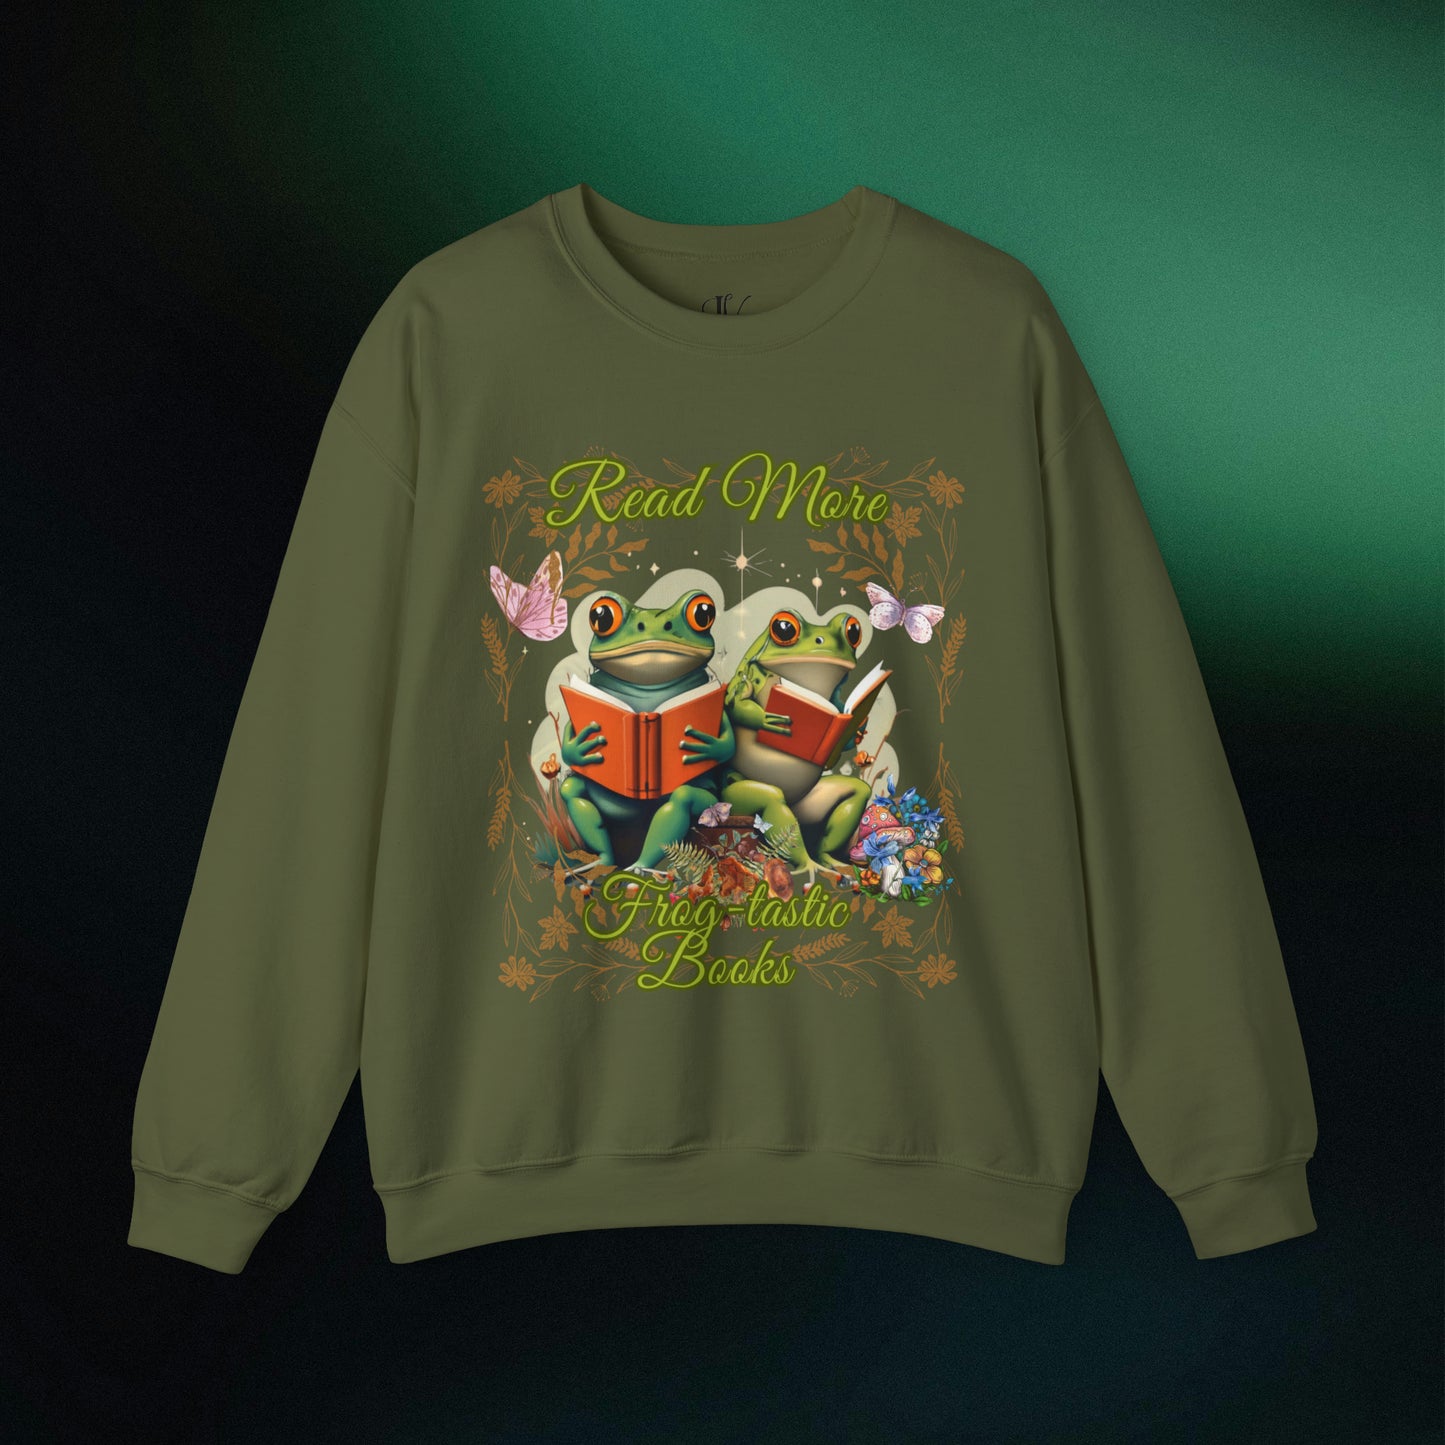 Frog Bookworm Sweatshirt | Read More Books Shirt | Aesthetic, Vintage Frog Sweatshirt Sweatshirt S Military Green 